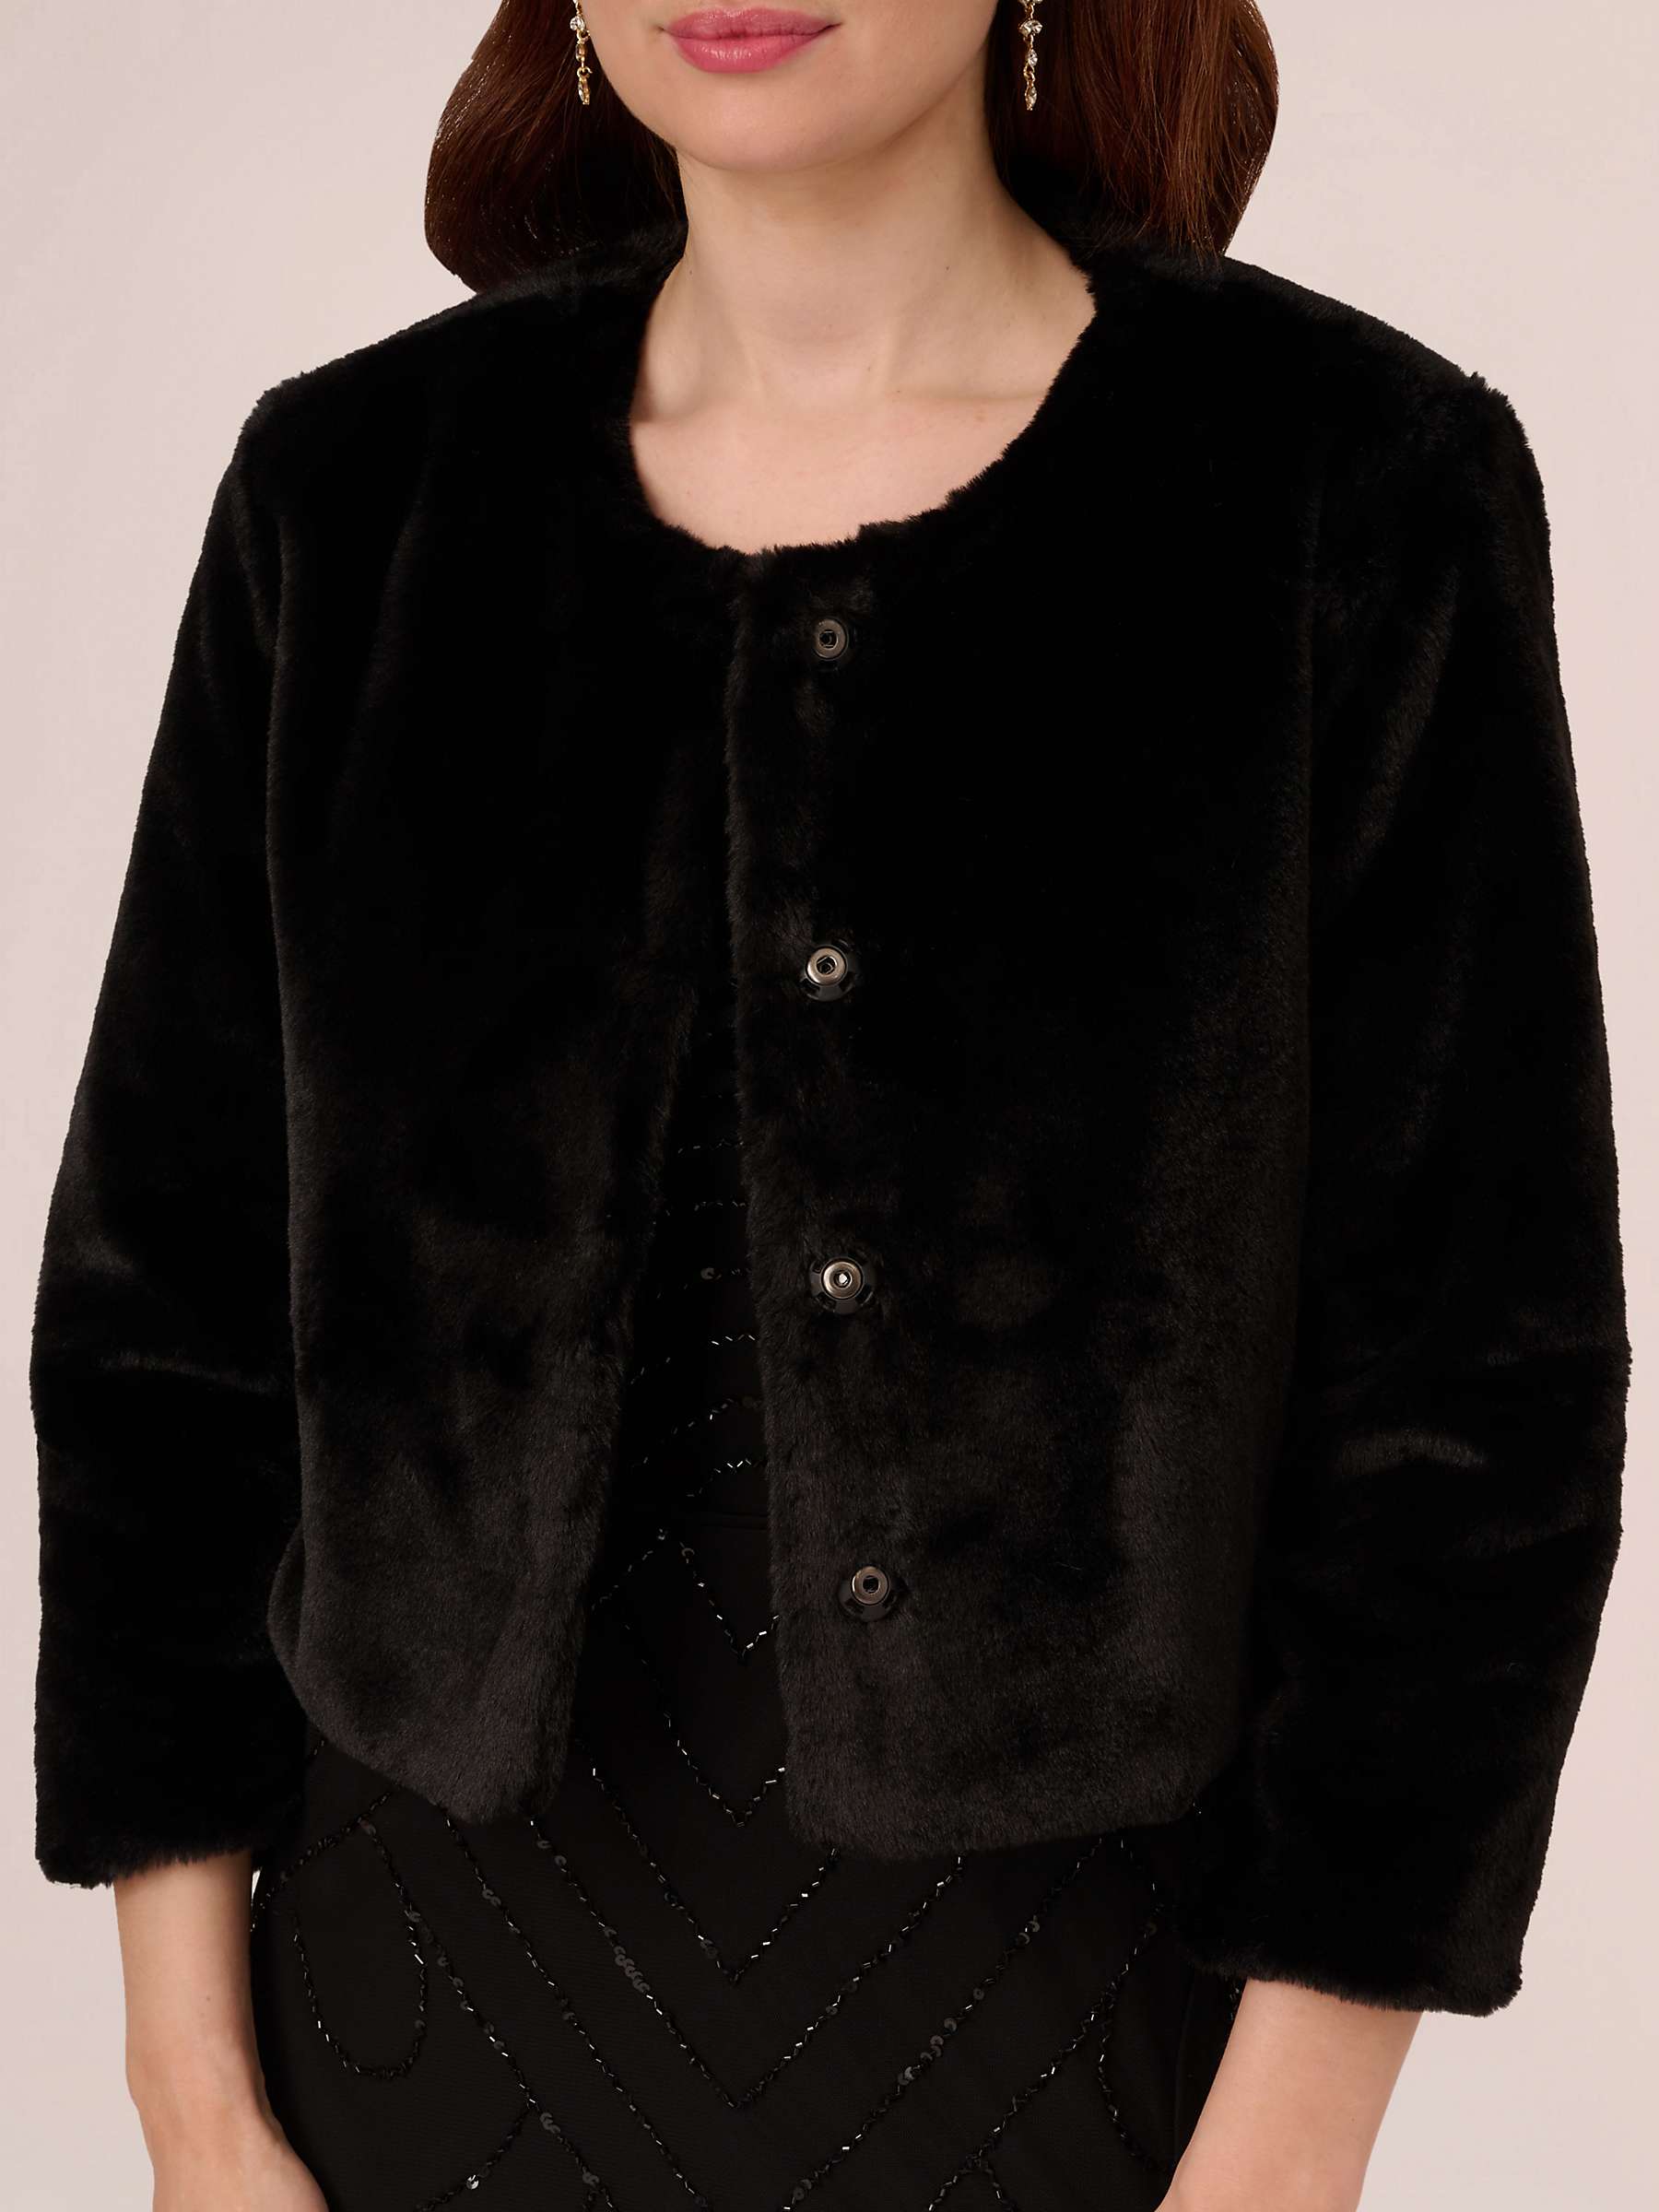 Adrianna Papell 3/4 Sleeve Faux Fur Jacket, Black at John Lewis & Partners